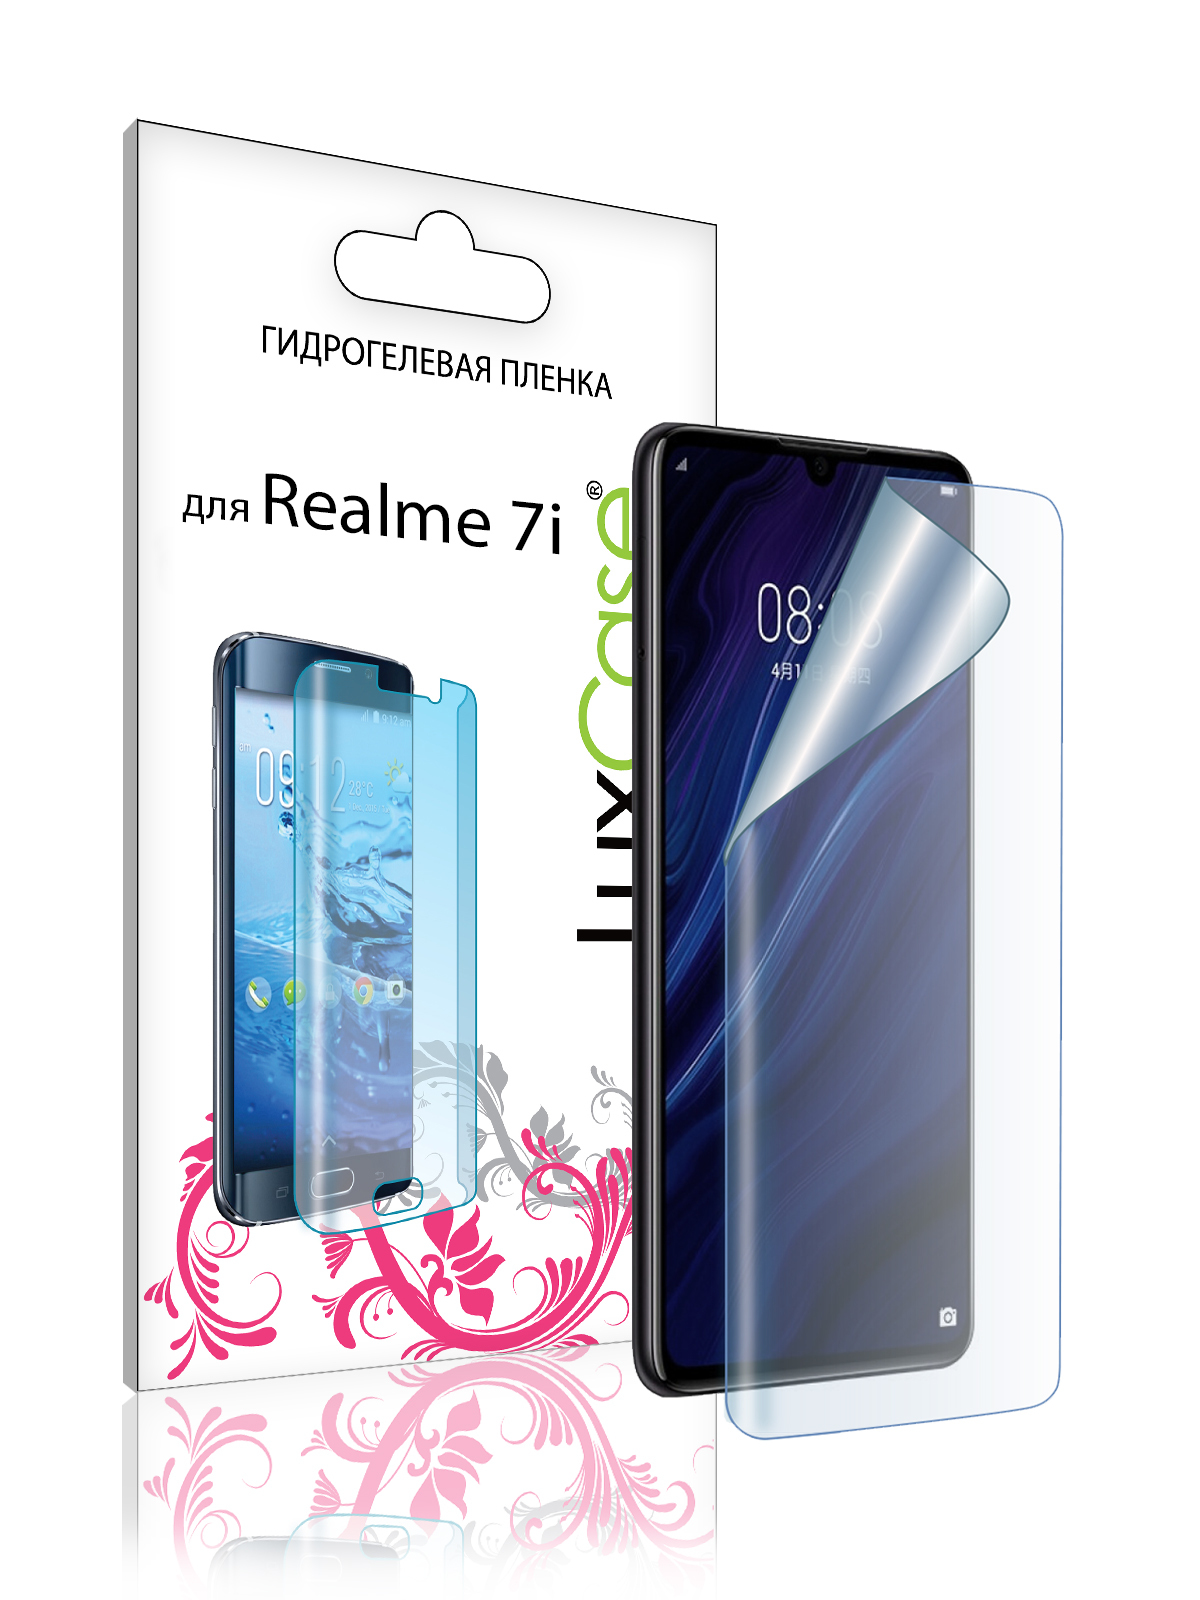 Пленка гидрогелевая LuxCase для Realme 7i 0.14mm Front Transparent 86591 гидрогелевая пленка luxcase для realme 7i 0 14mm front and back transparent 86593